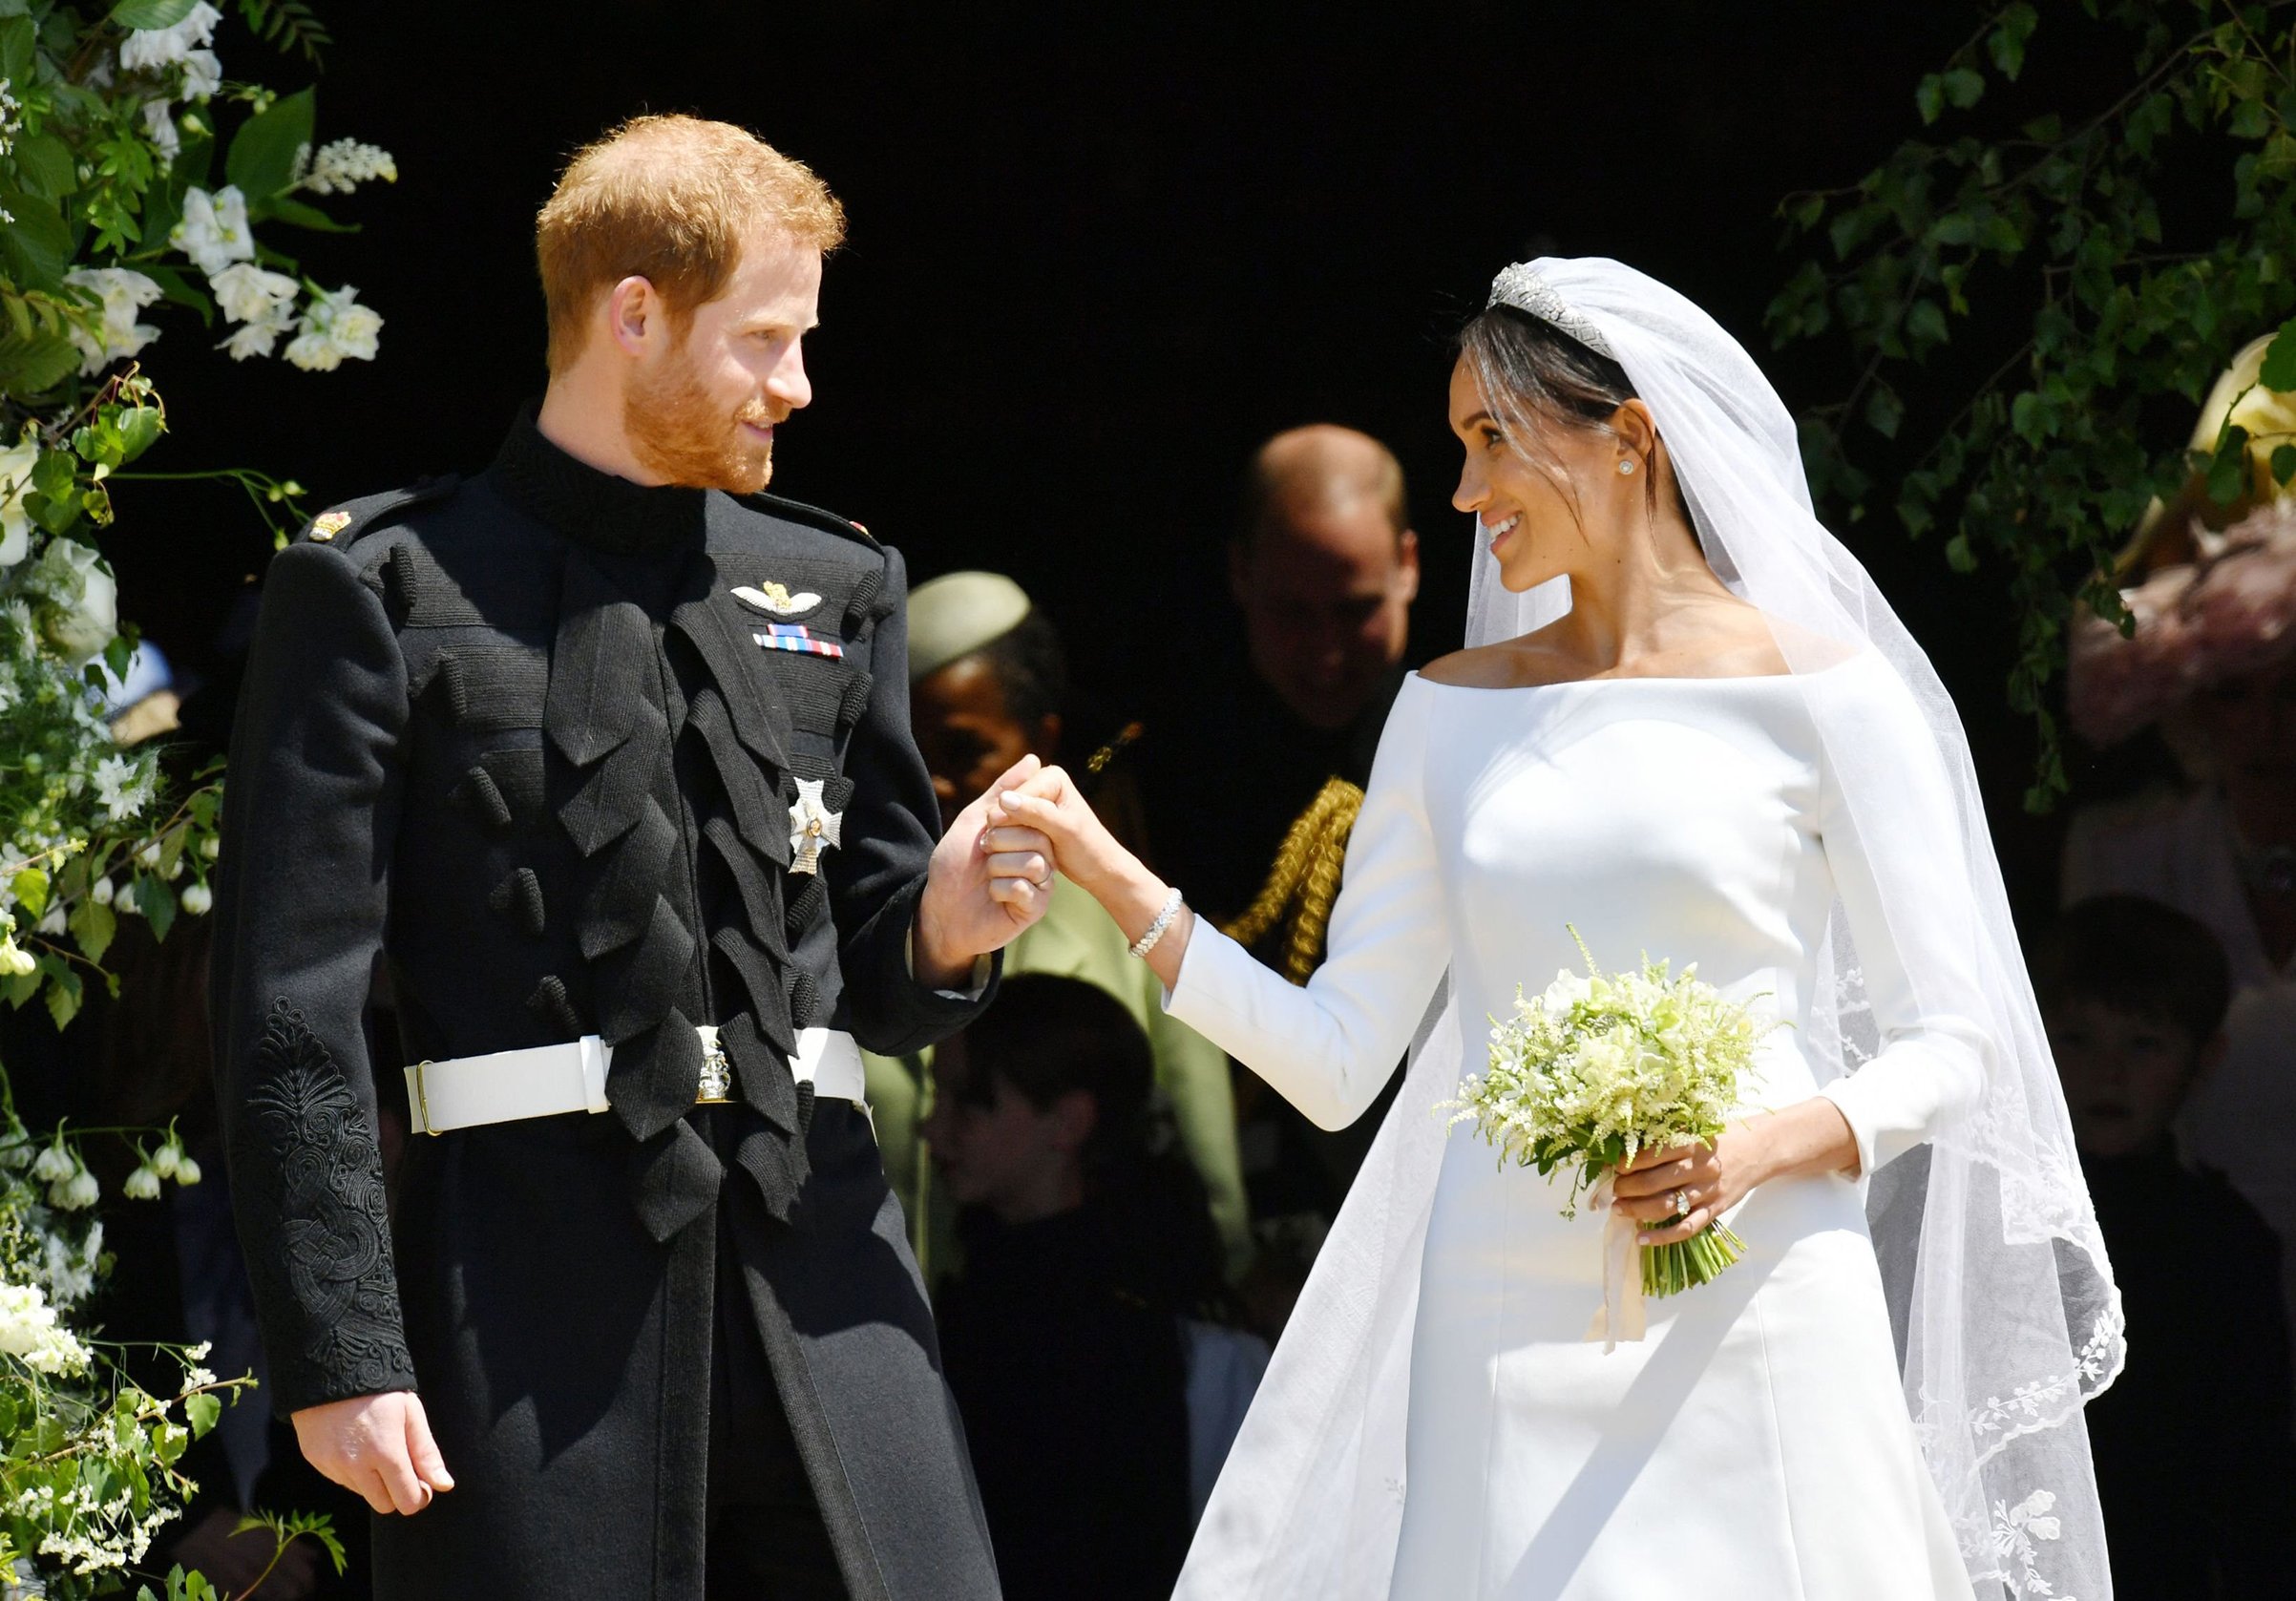 Tampilan Gaun Elegan di Royal Wedding Pangeran Harry dan Meghan Markle